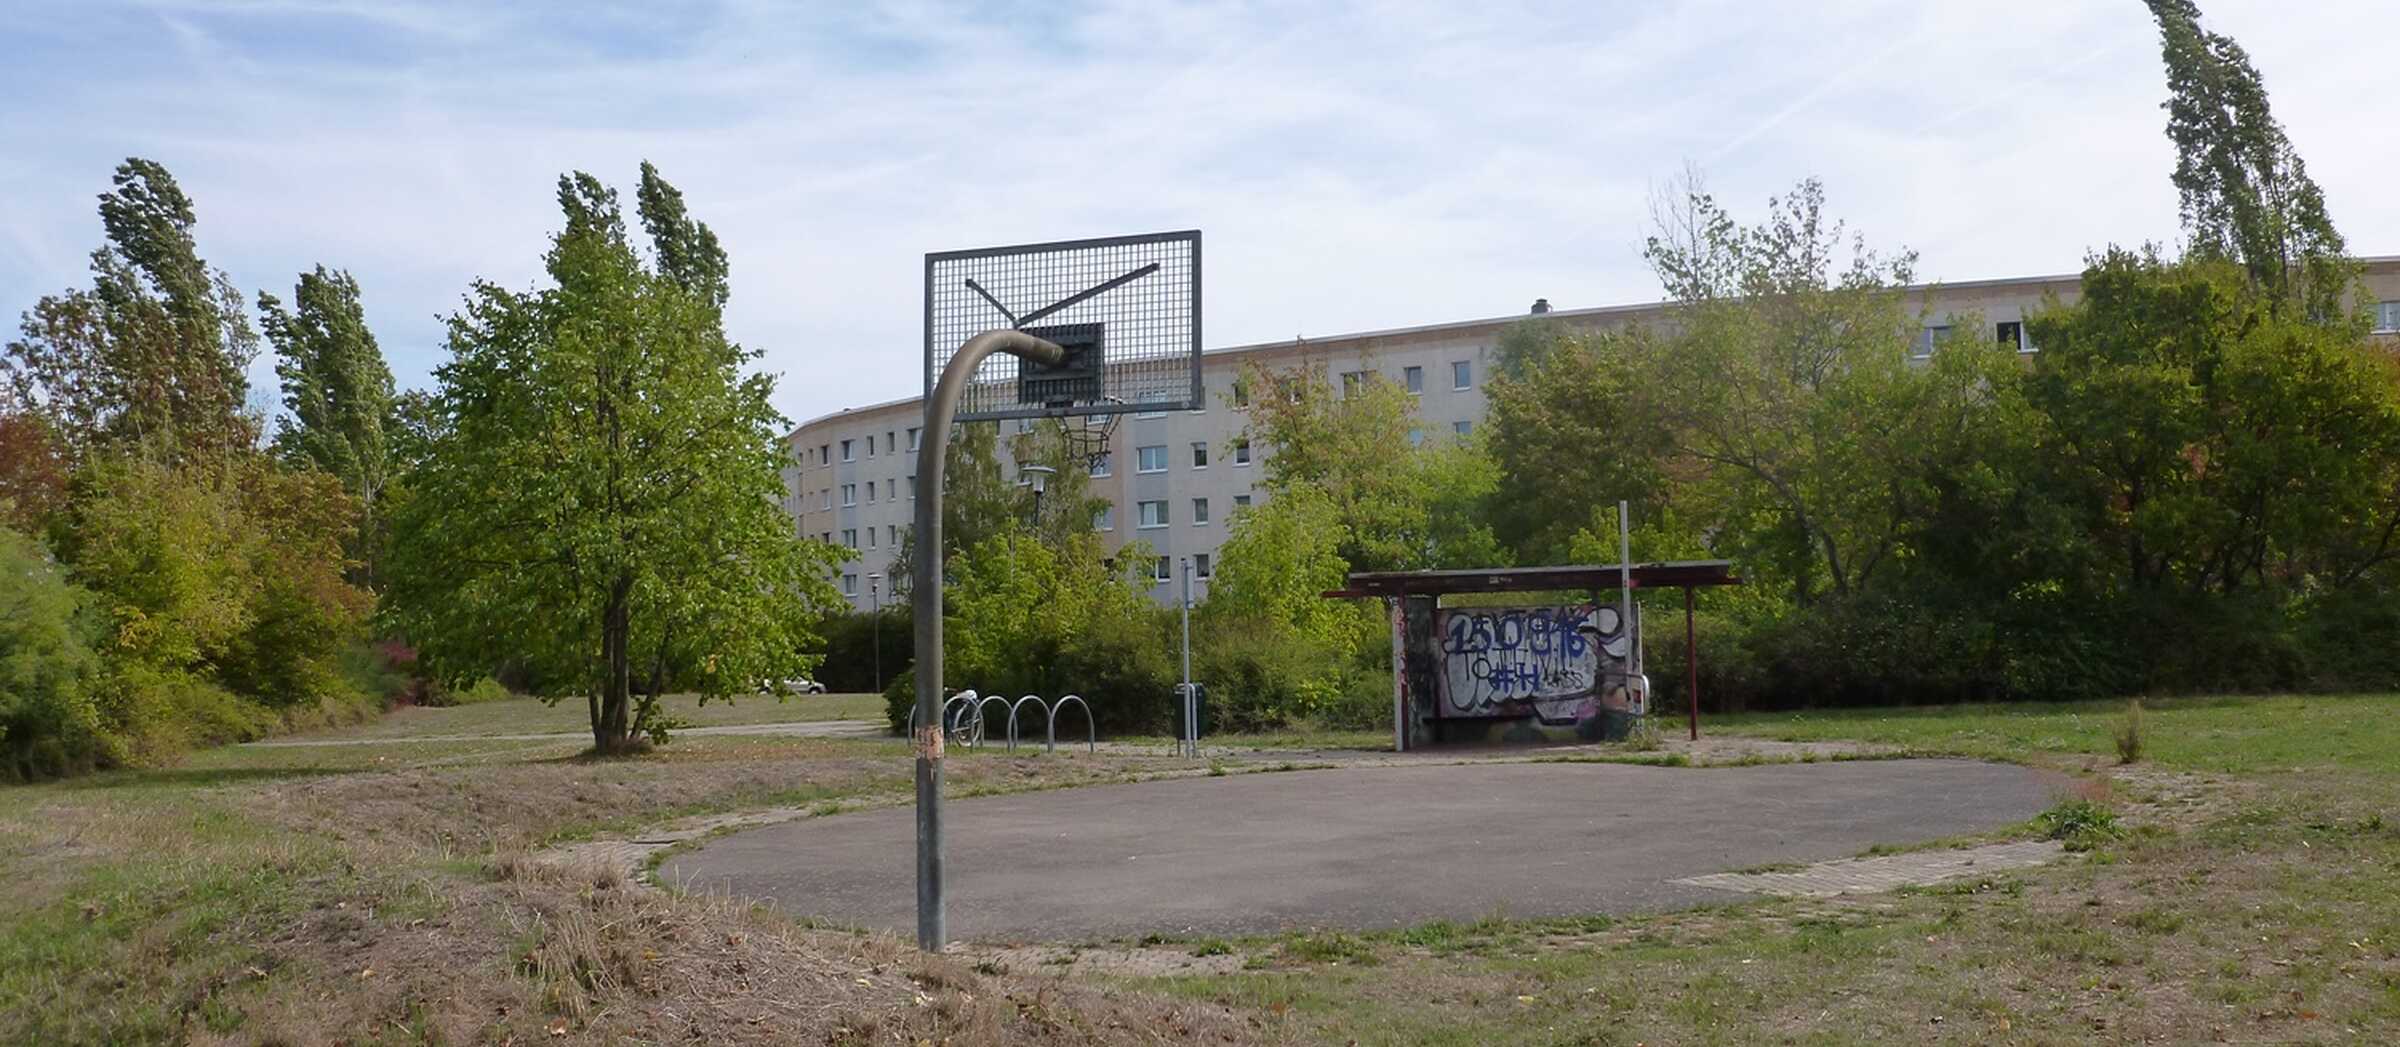 Streetballplatz Erhard-Hübner-Straße